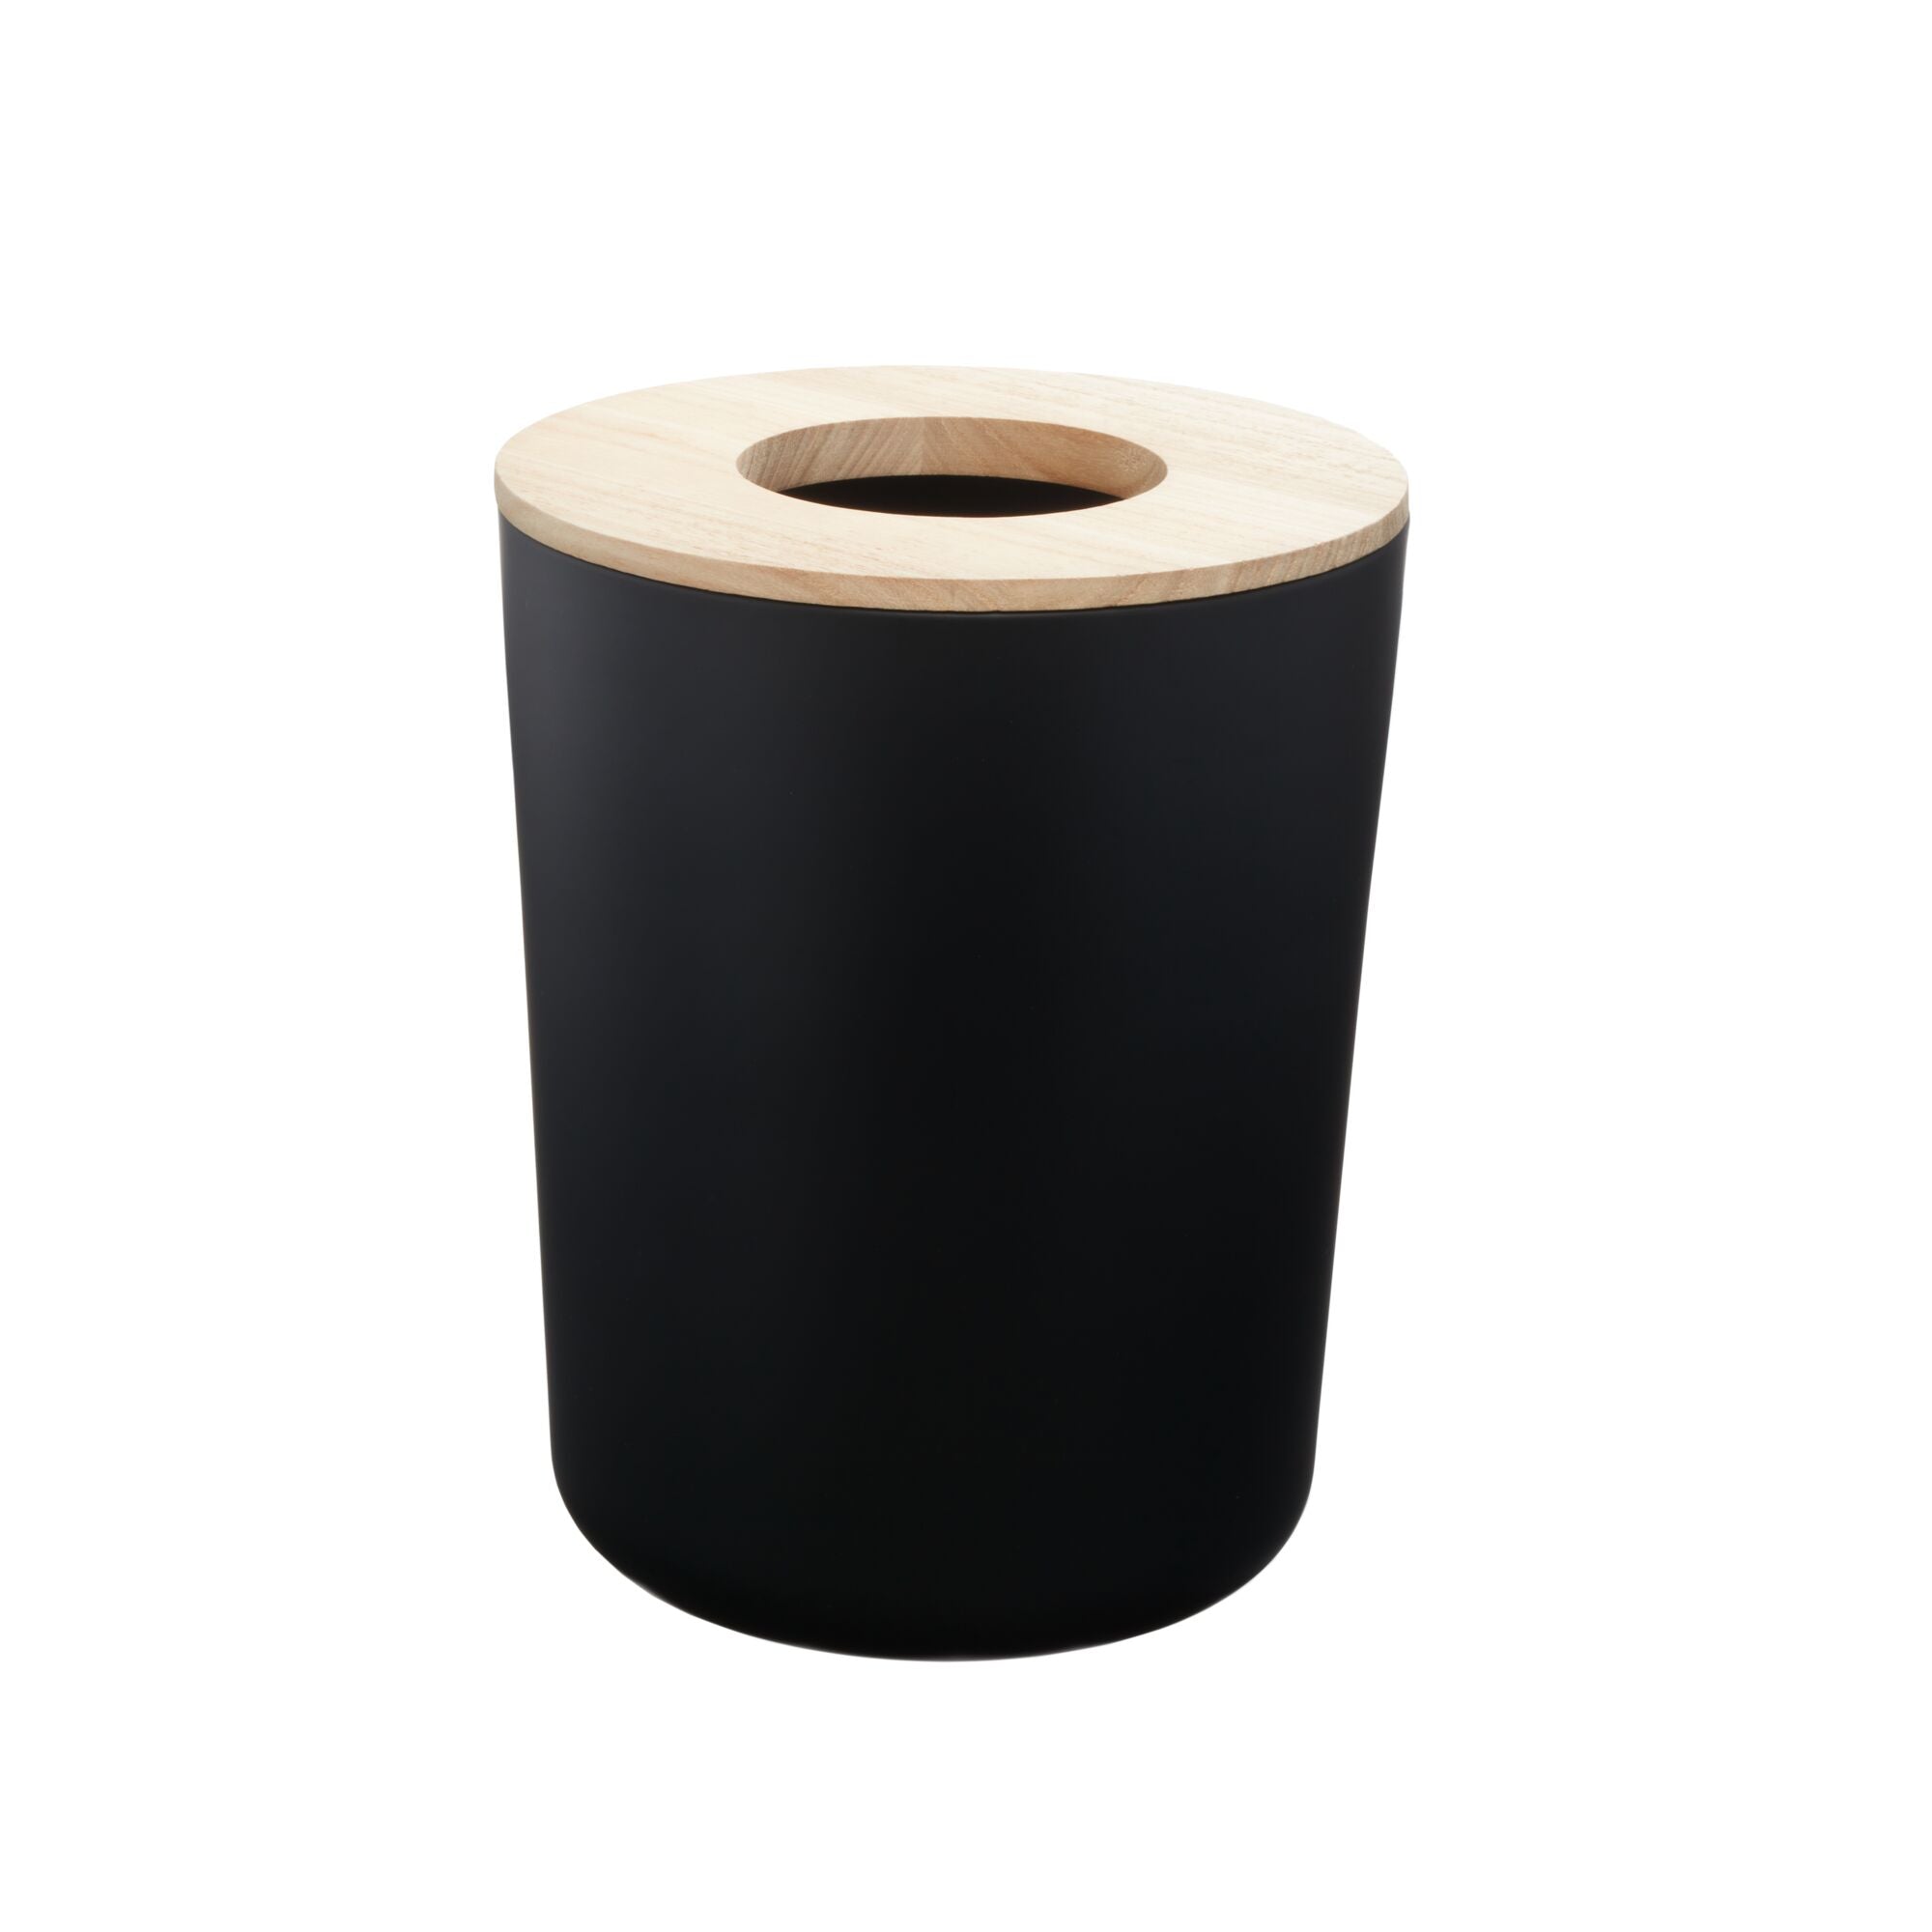 Toilet Paper Holder with Natural Marble Shelf, Matte Black Toilet